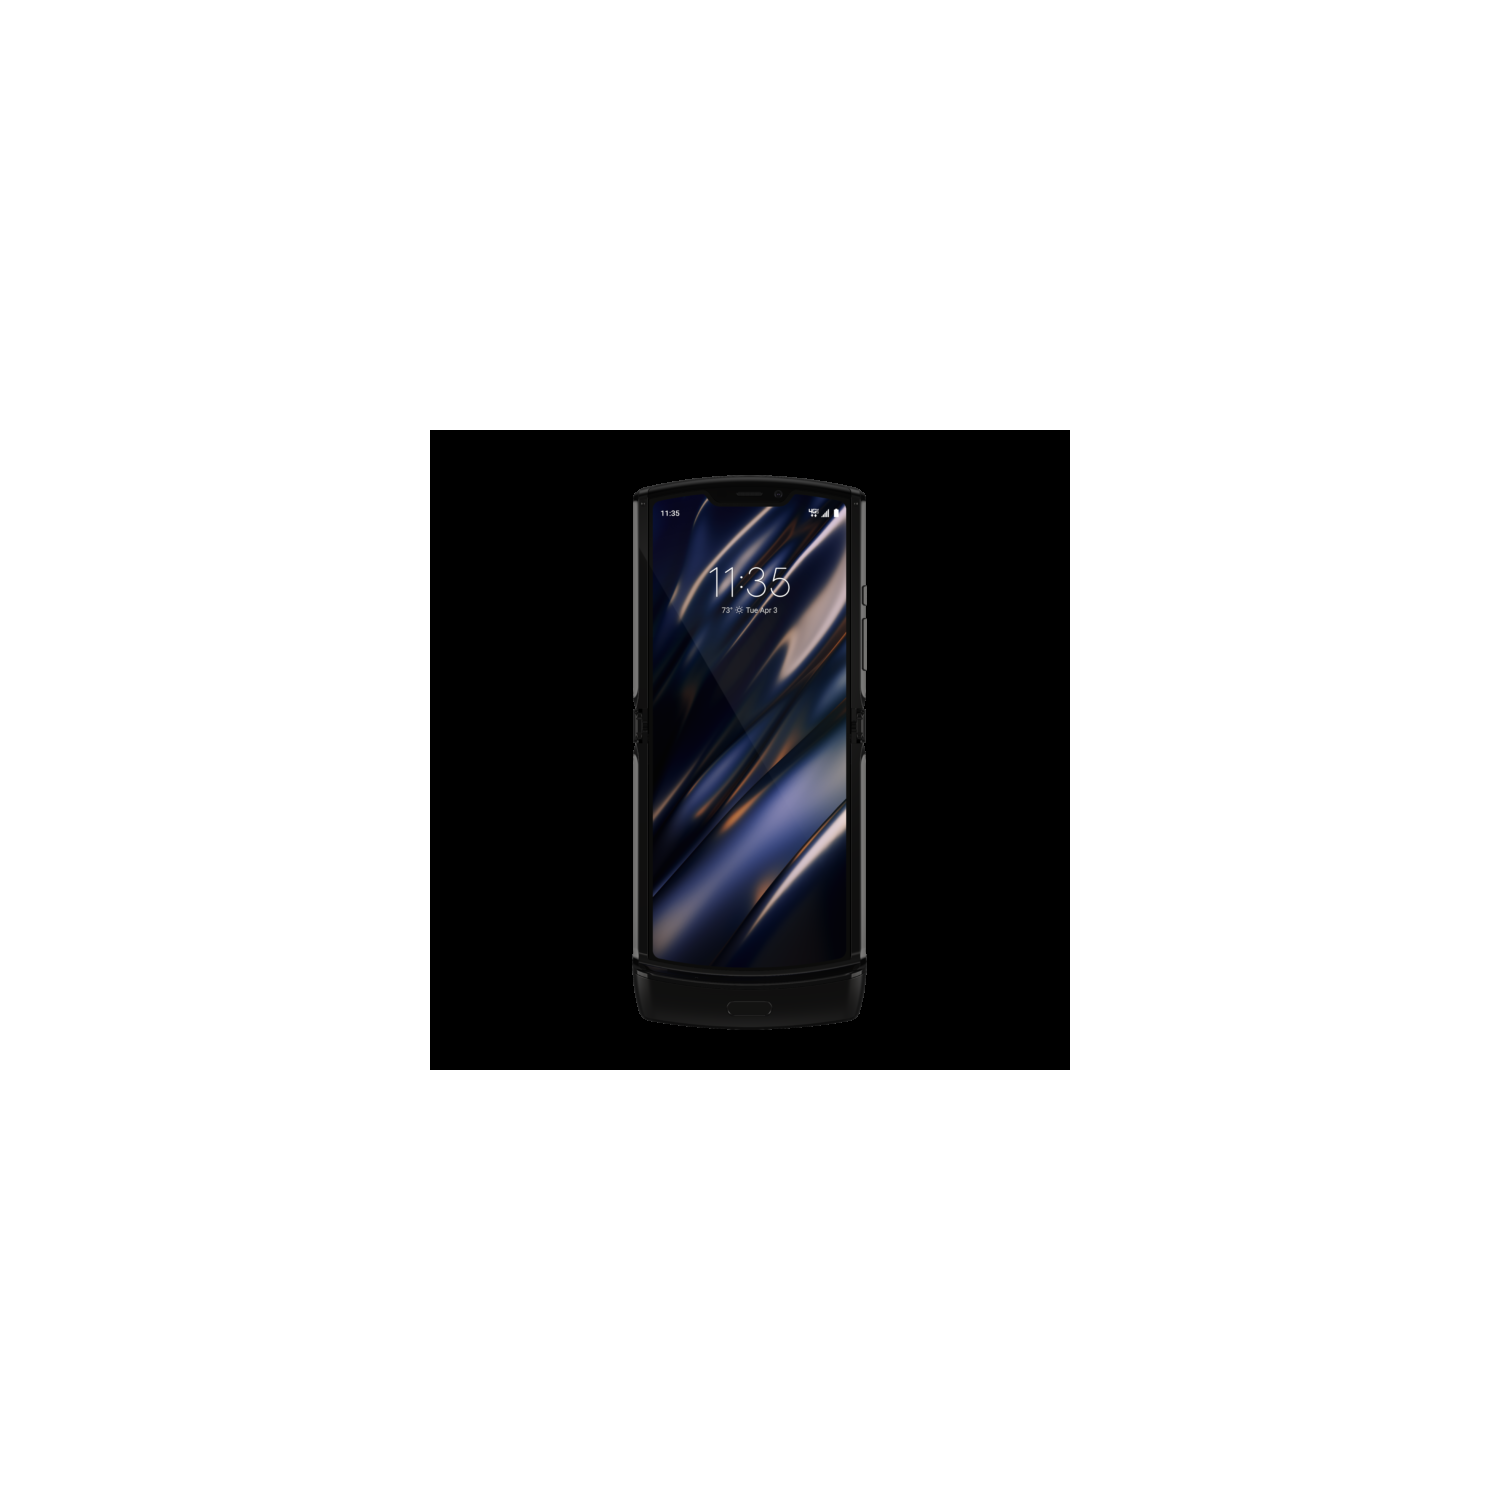 Motorola Razr (2019) 128GB Smartphone - Black - Unlocked - Certified Pre-Owned